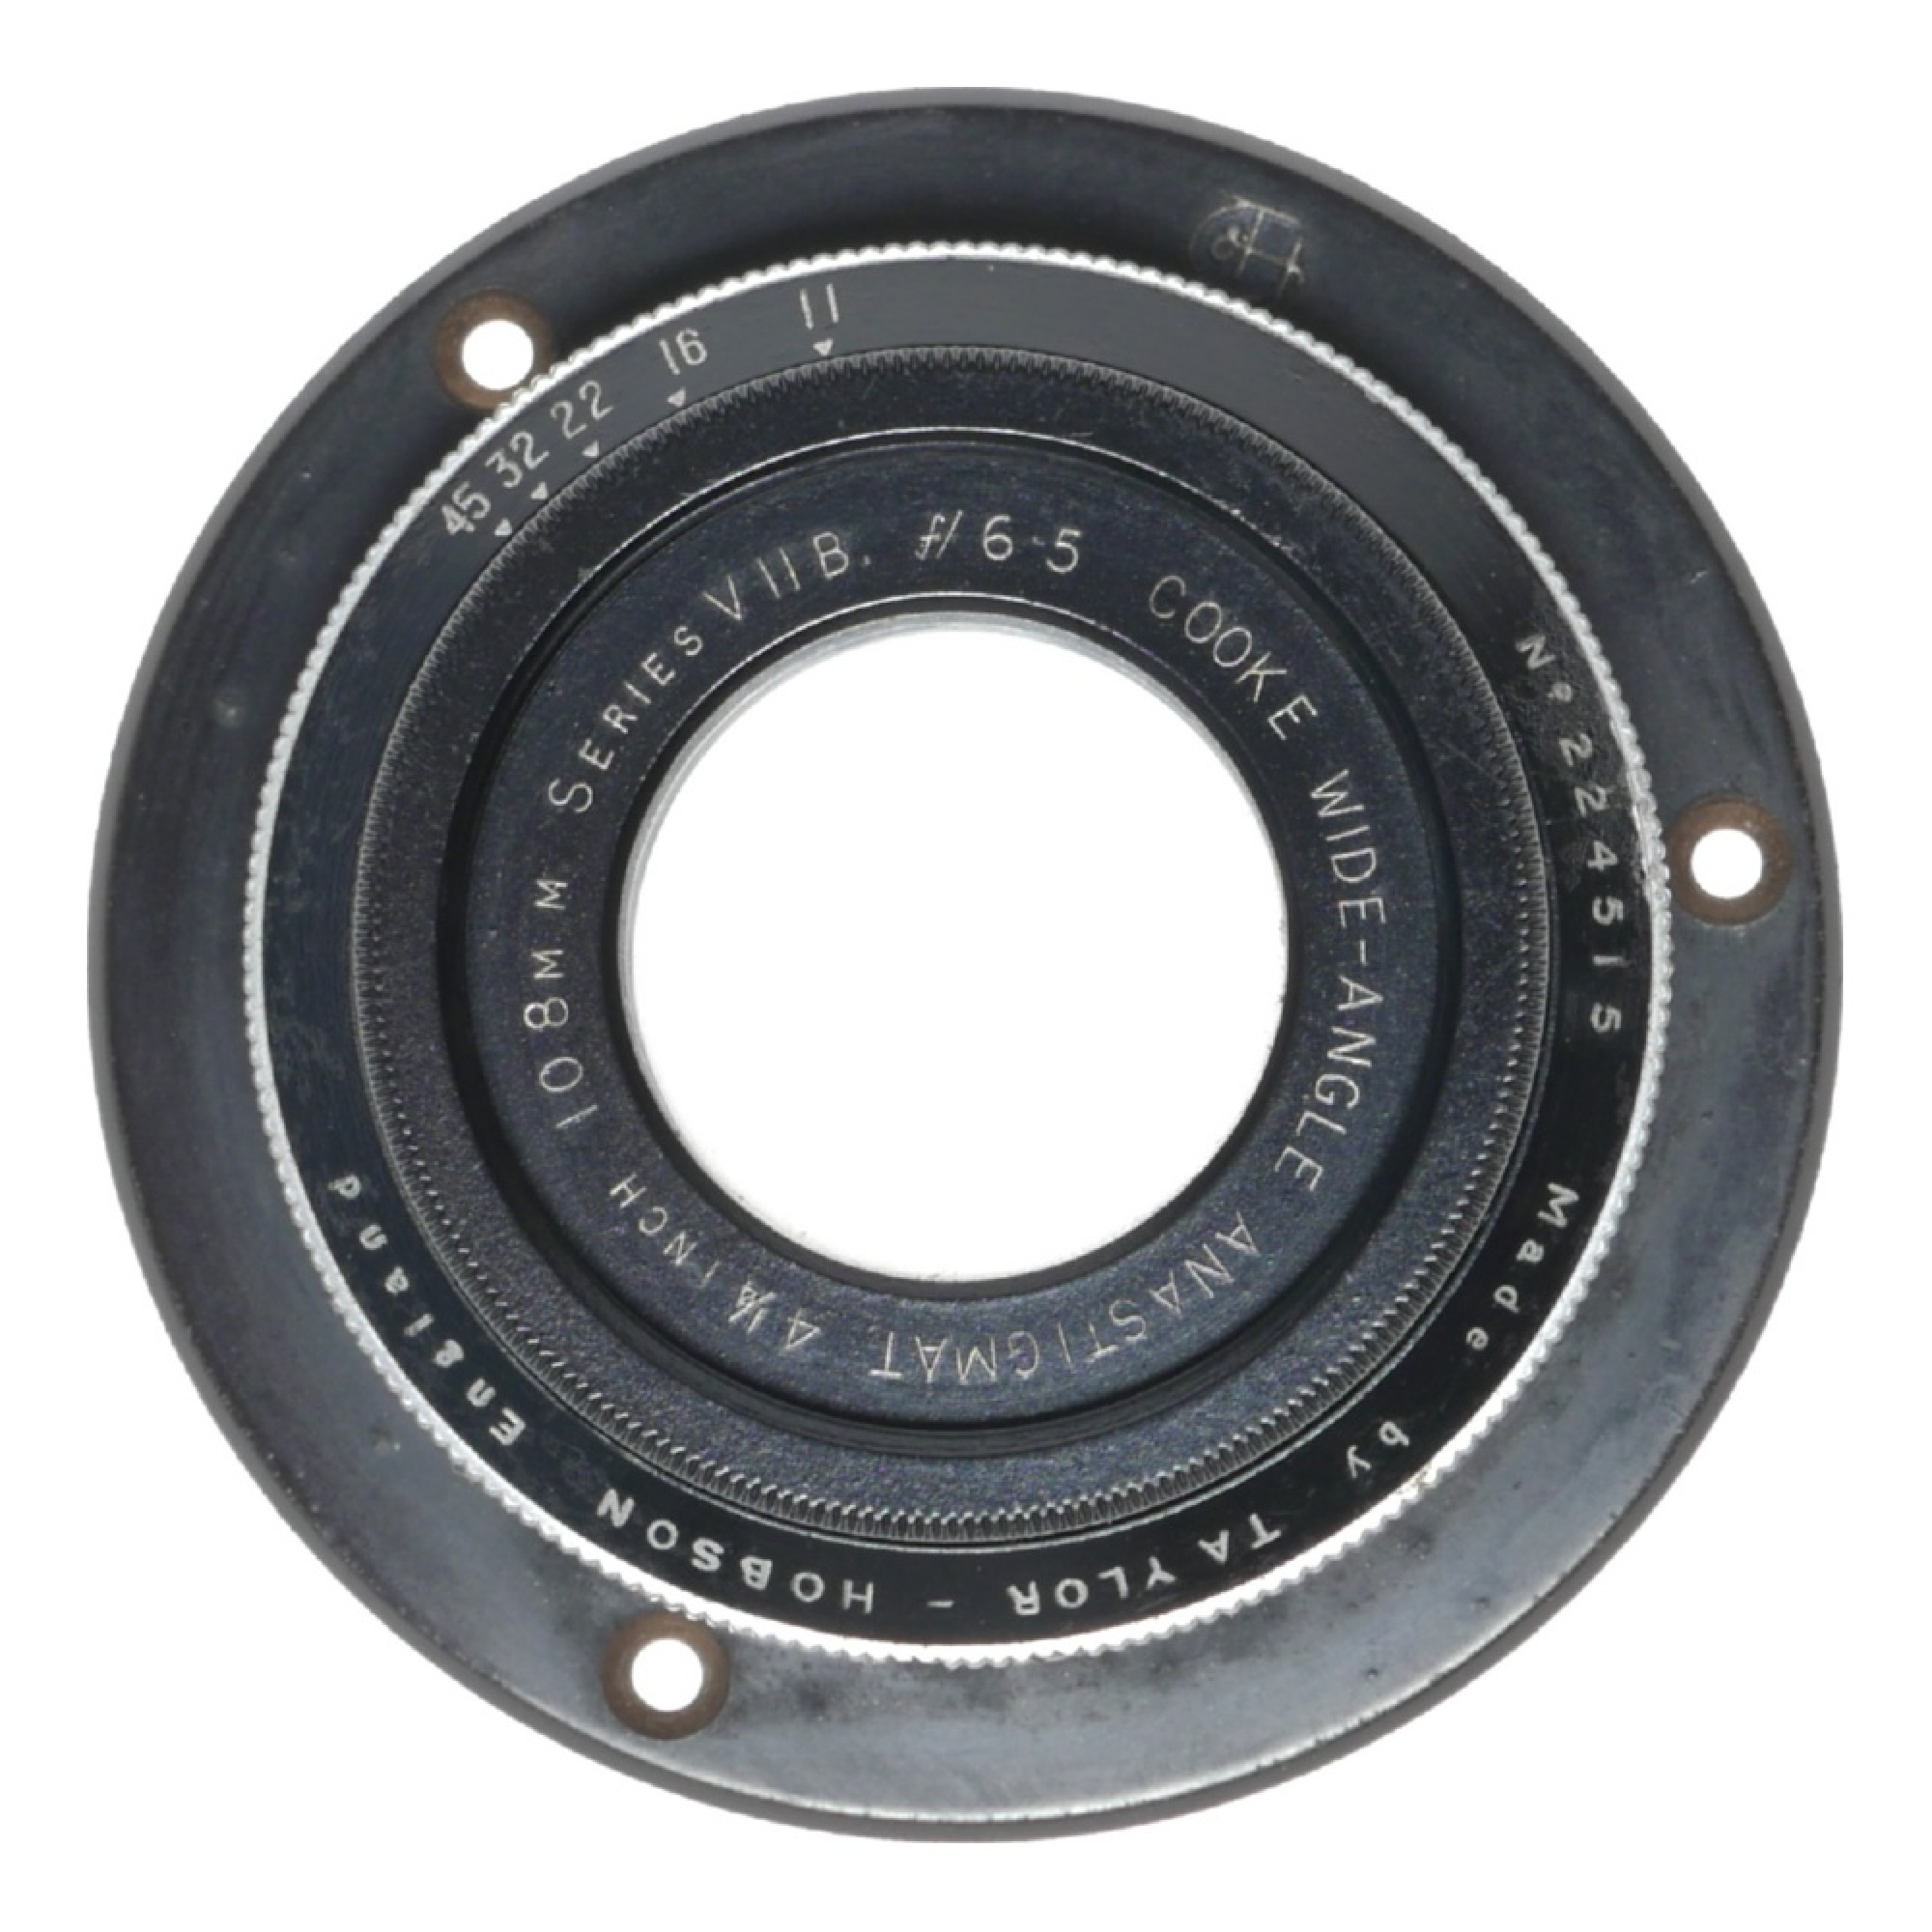 Cooke Wide-Angle Anastigmat 4 1/4 Inch 108mm Series VIIB f/6.5 Lens